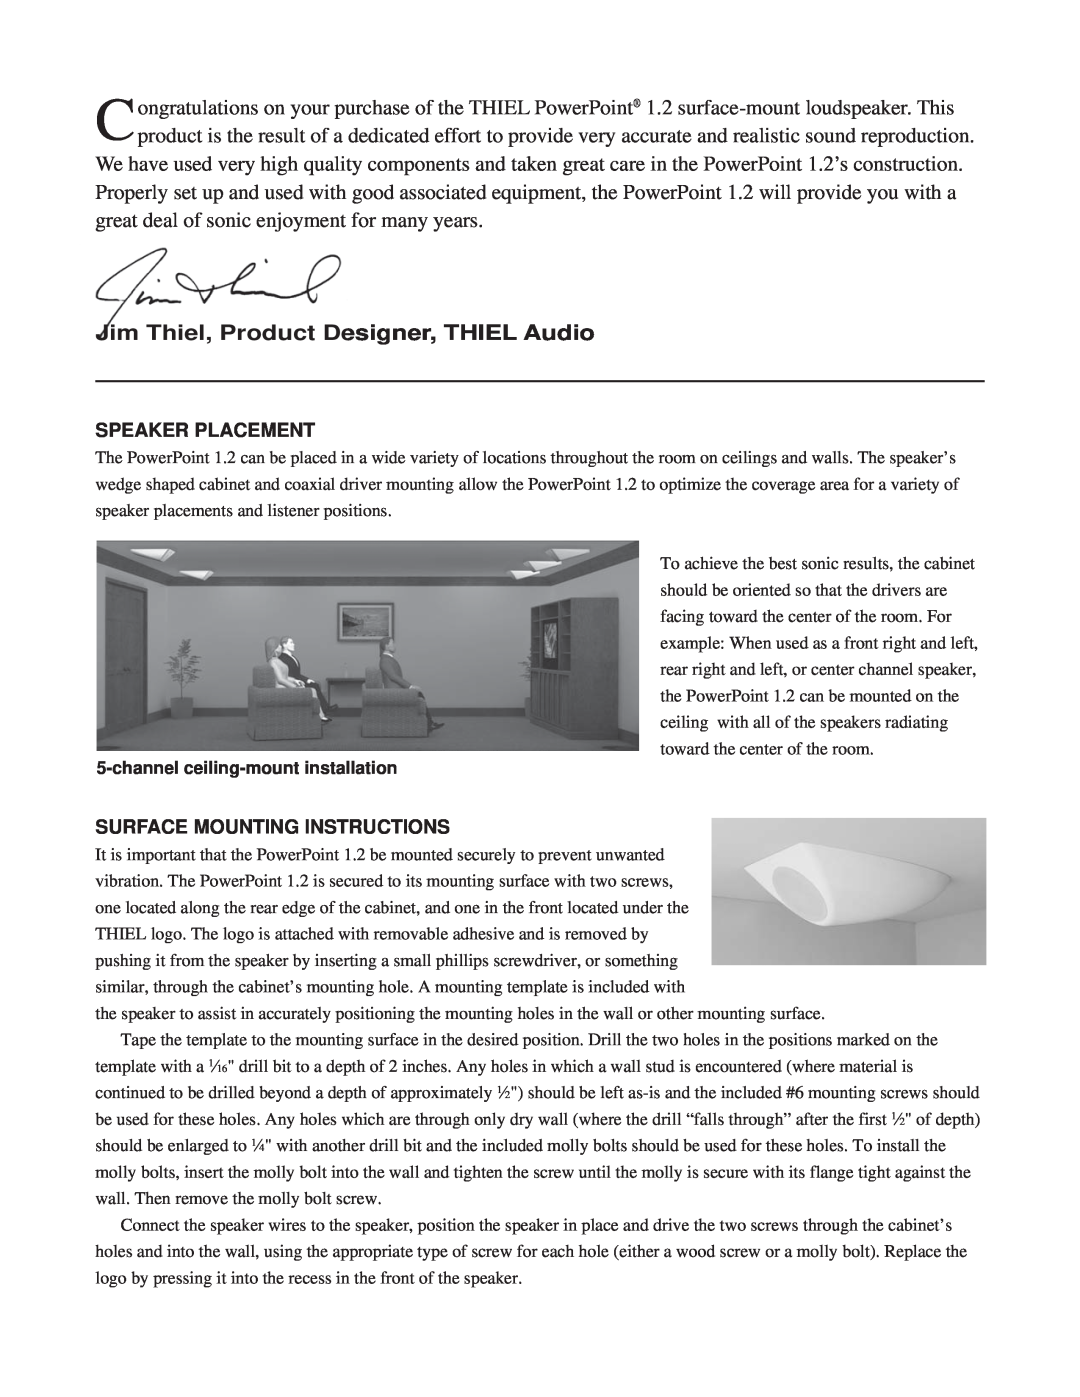 Thiel Audio Products 1.2 manual Jim Thiel, Product Designer, THIEL Audio, Speaker Placement, Surface Mounting Instructions 